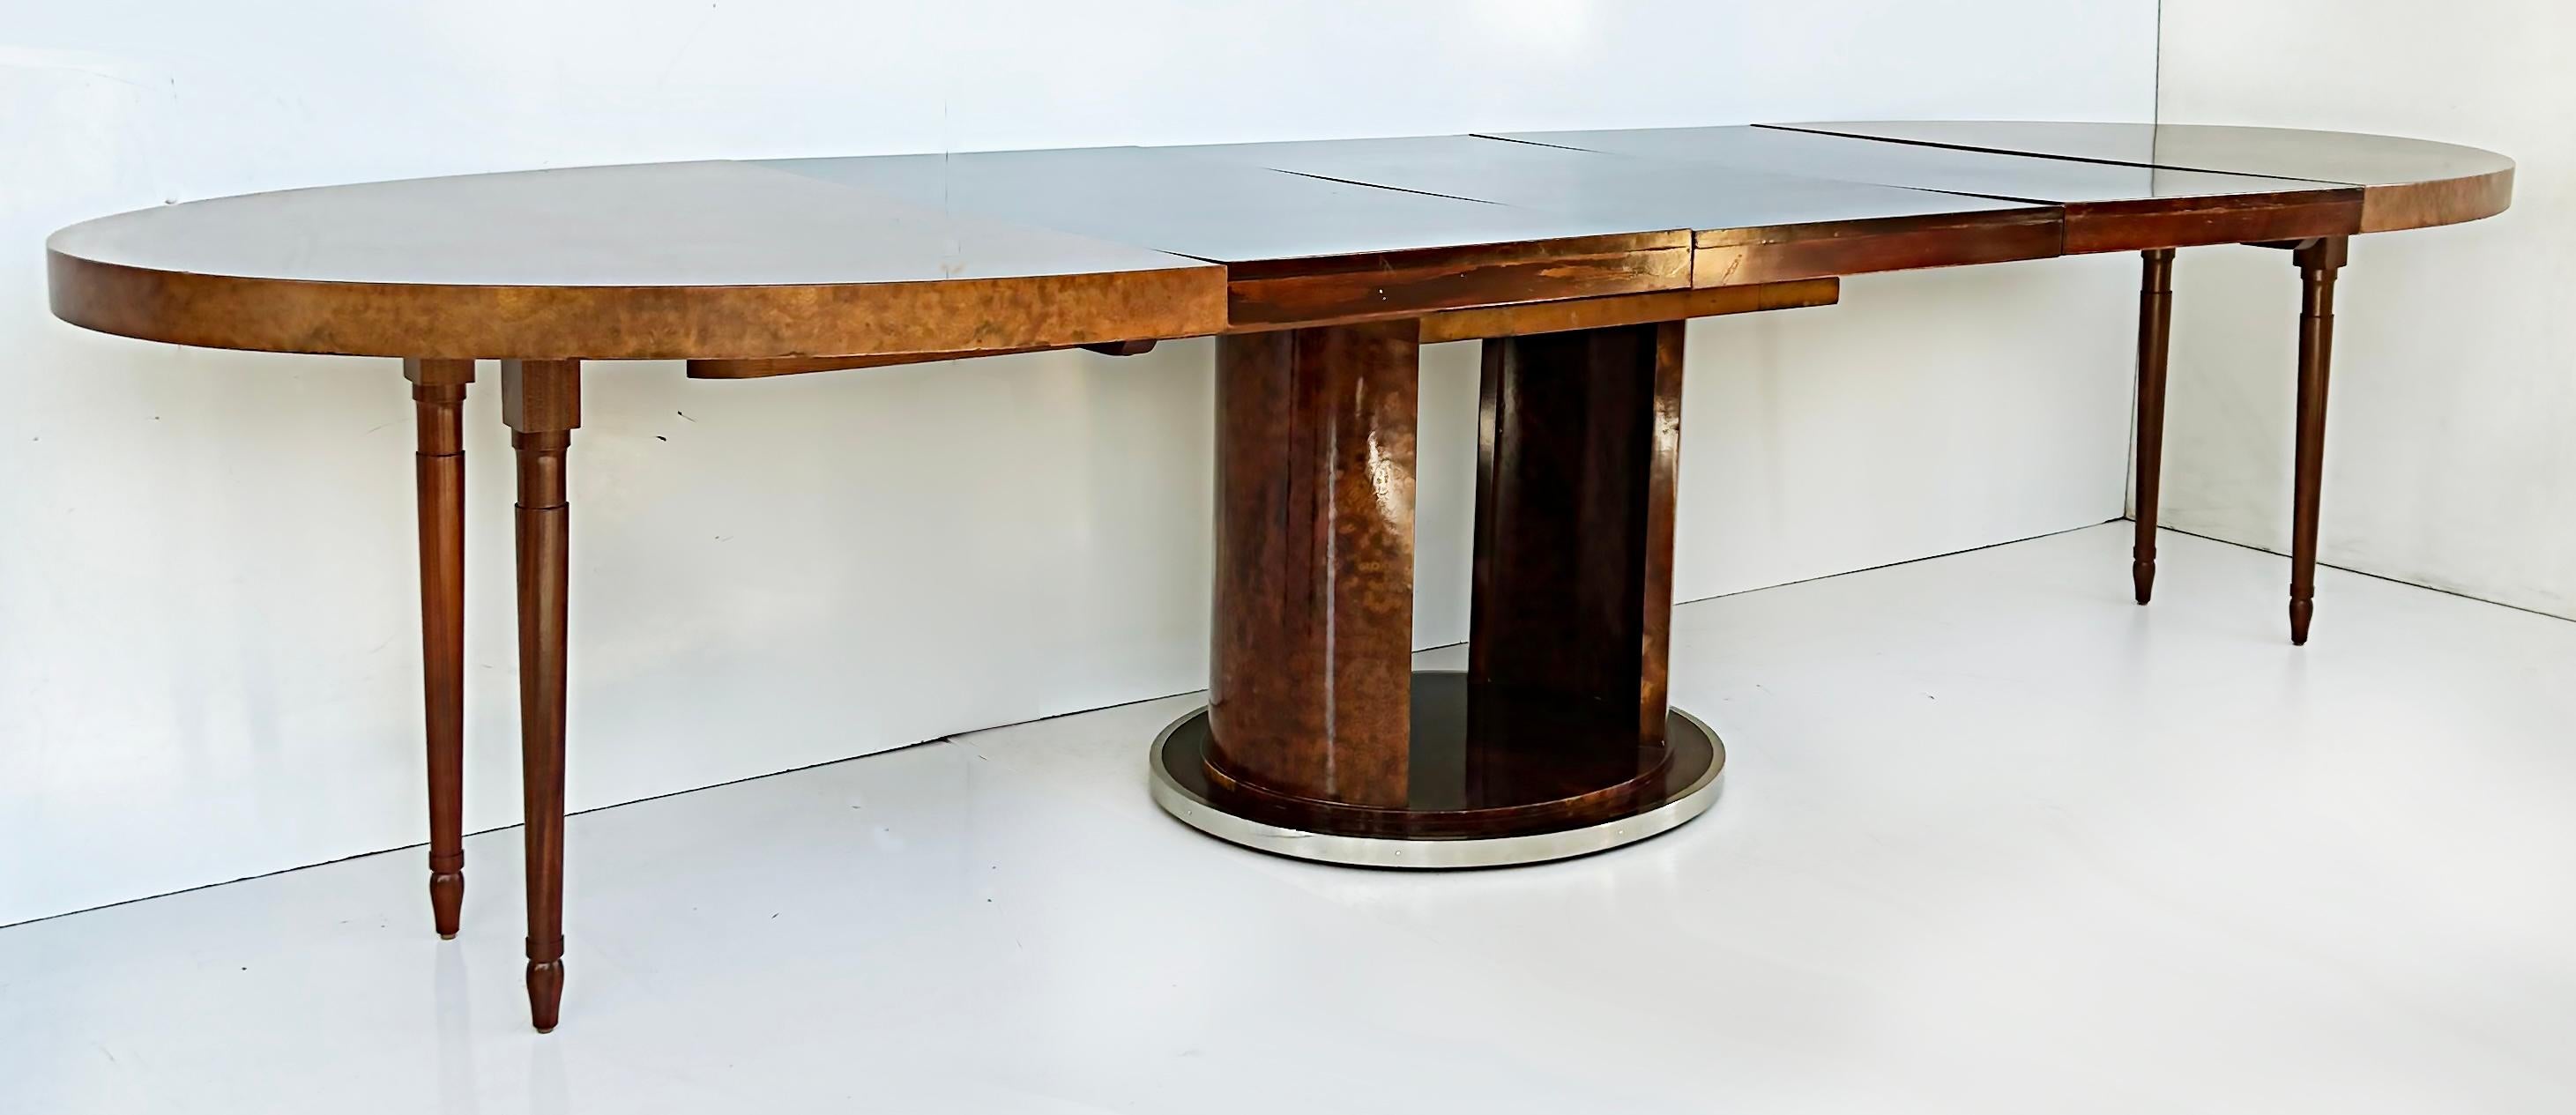 20th Century French Art Deco Rinck Paris Burlwood Dining Table 1930s, Extending Oval Pedestal For Sale